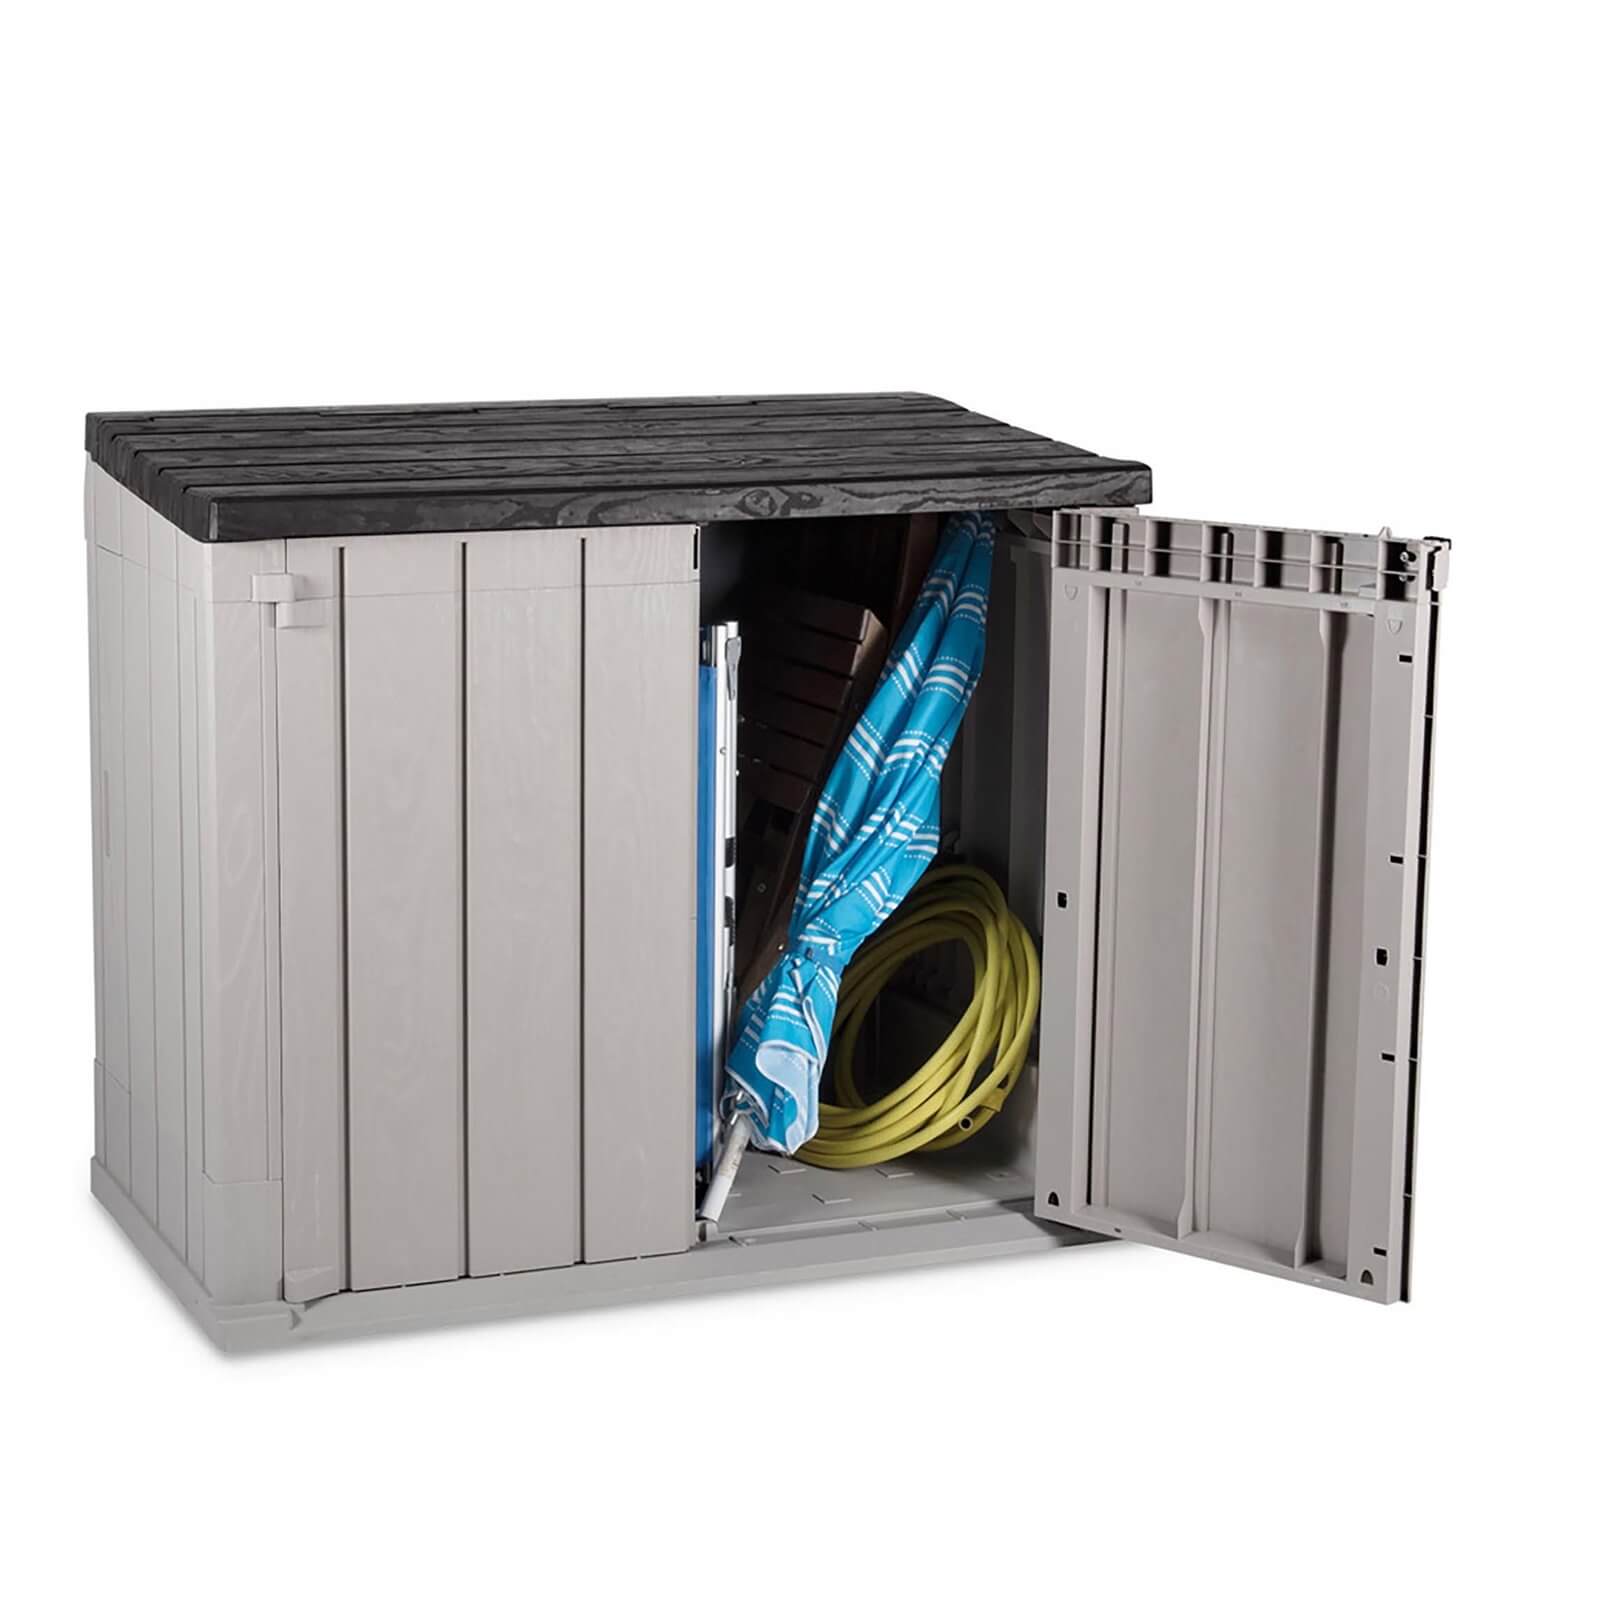 Toomax Stora Way XL 1270L Garden Storage Box in Taupe Grey